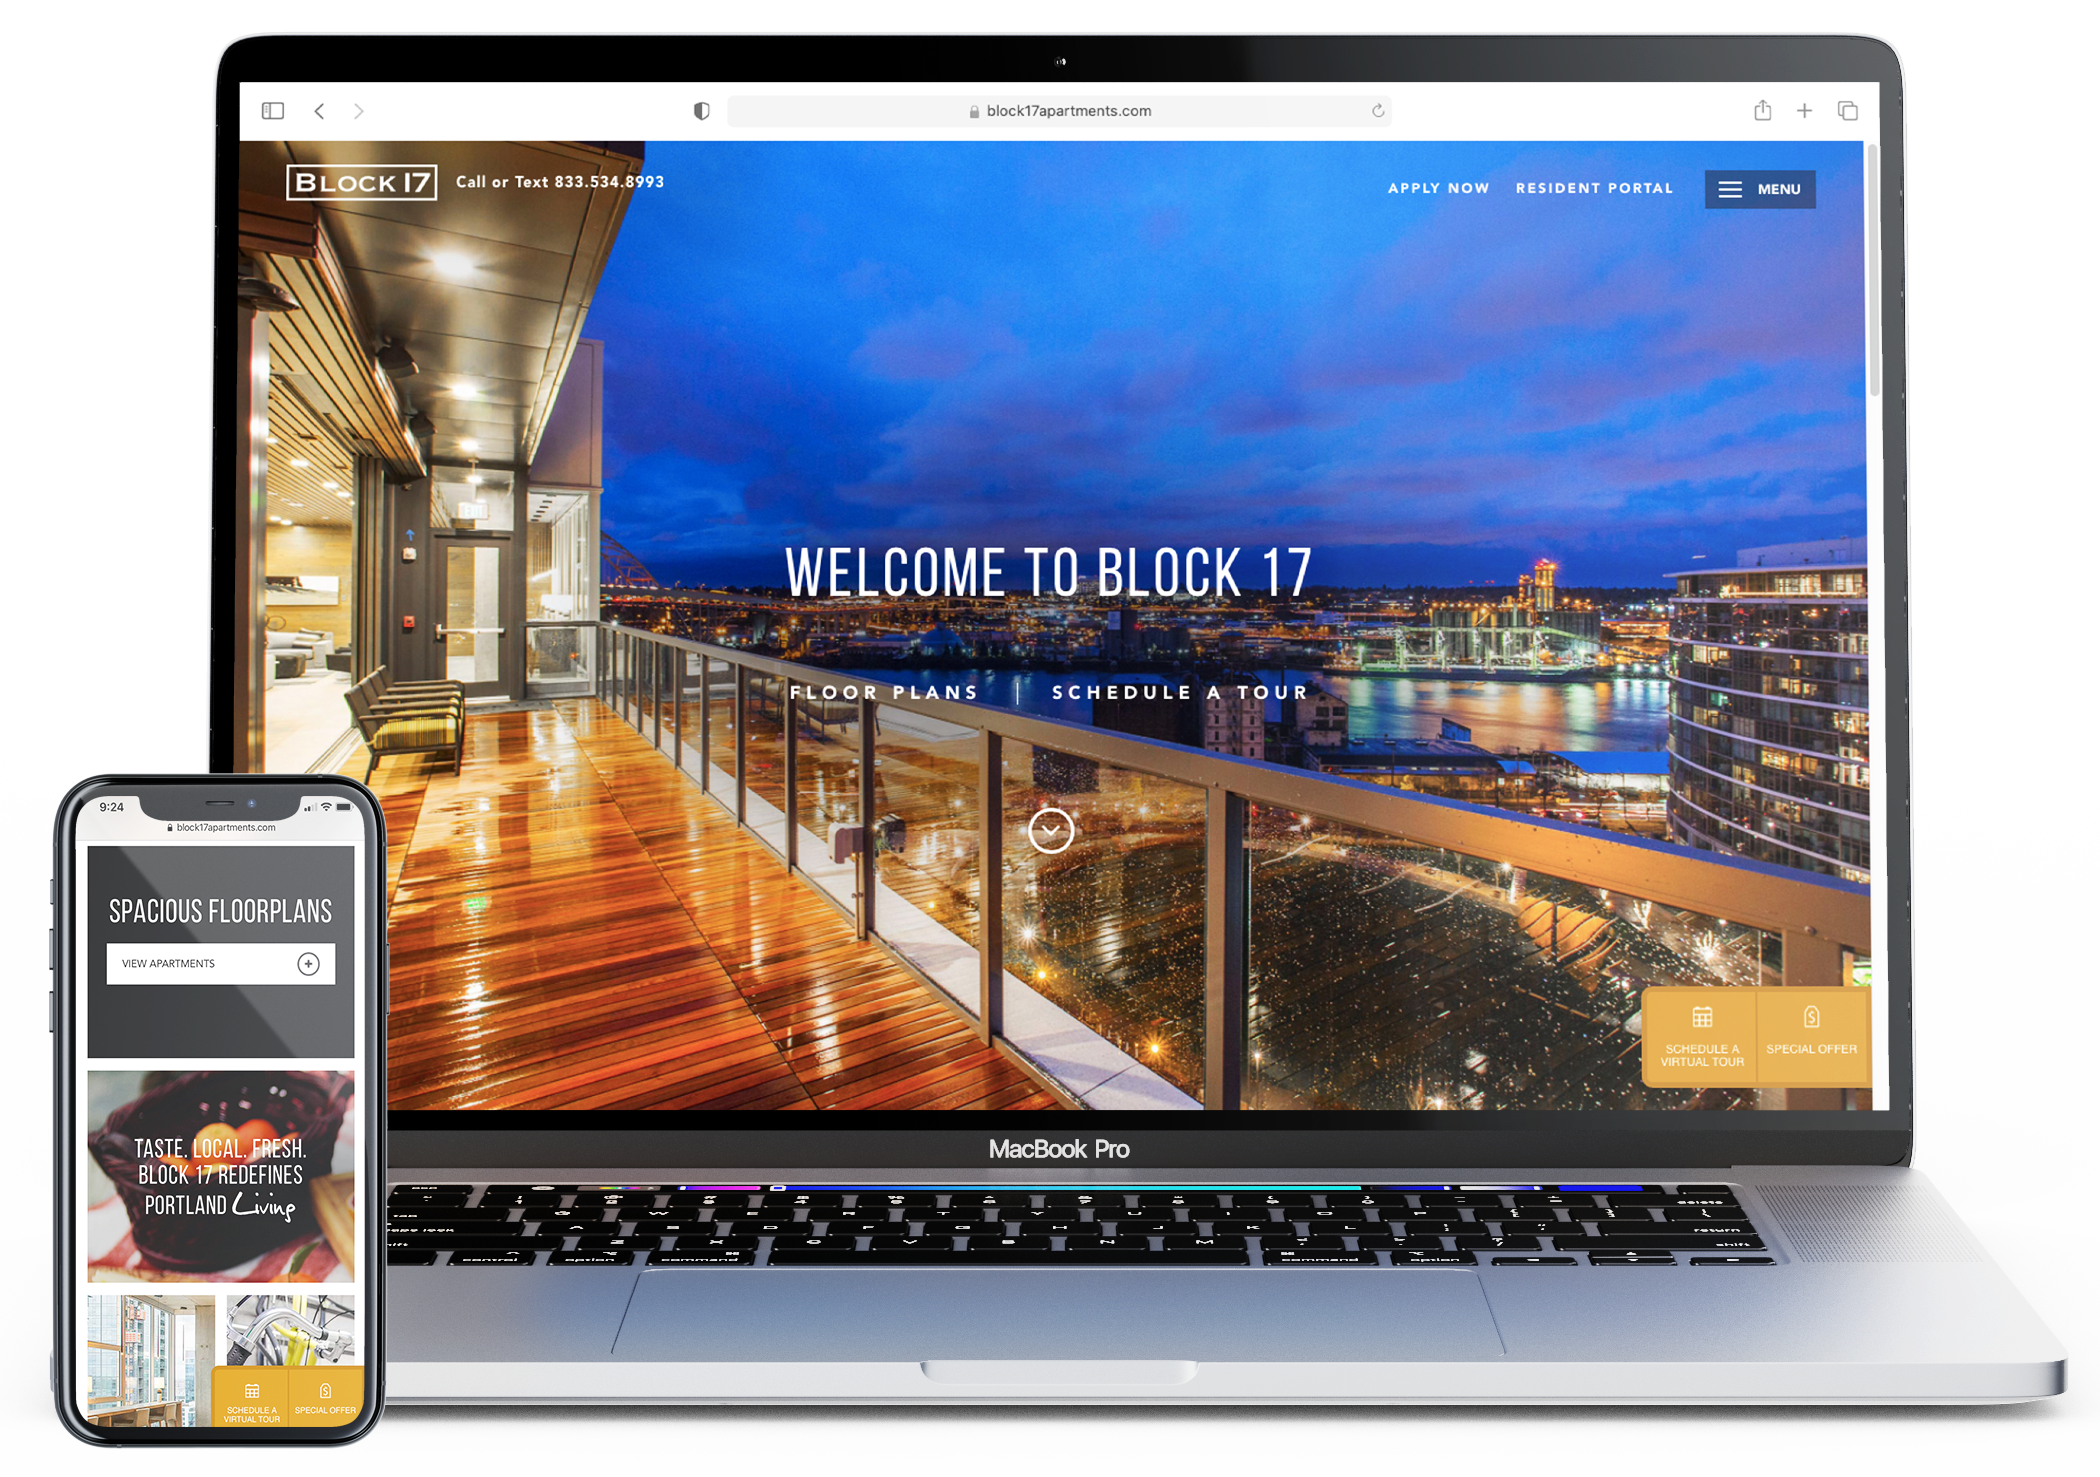 Block 17 Apartments website mockup displayed on desktop and mobile.